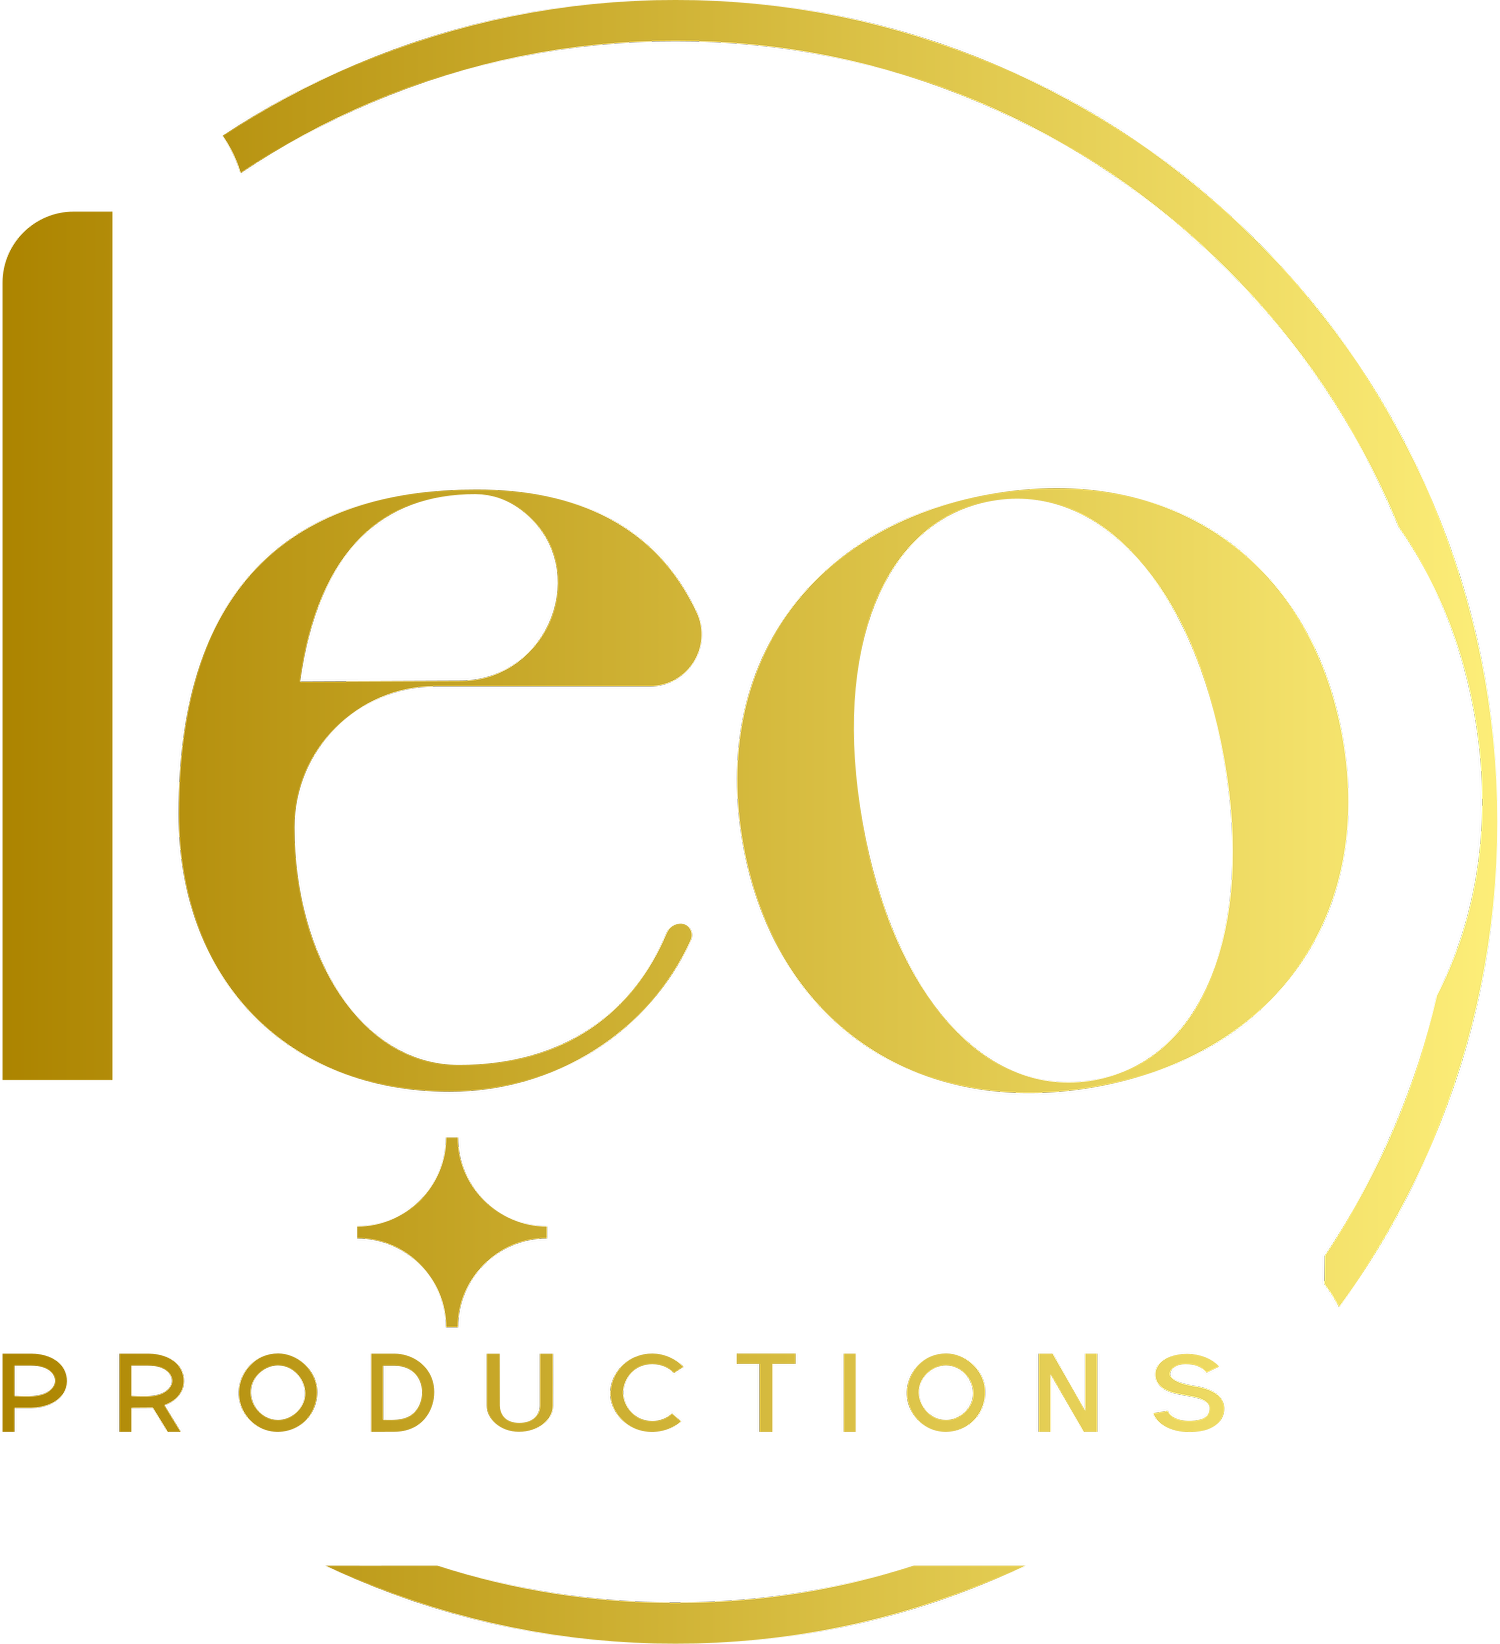 LEO Productions